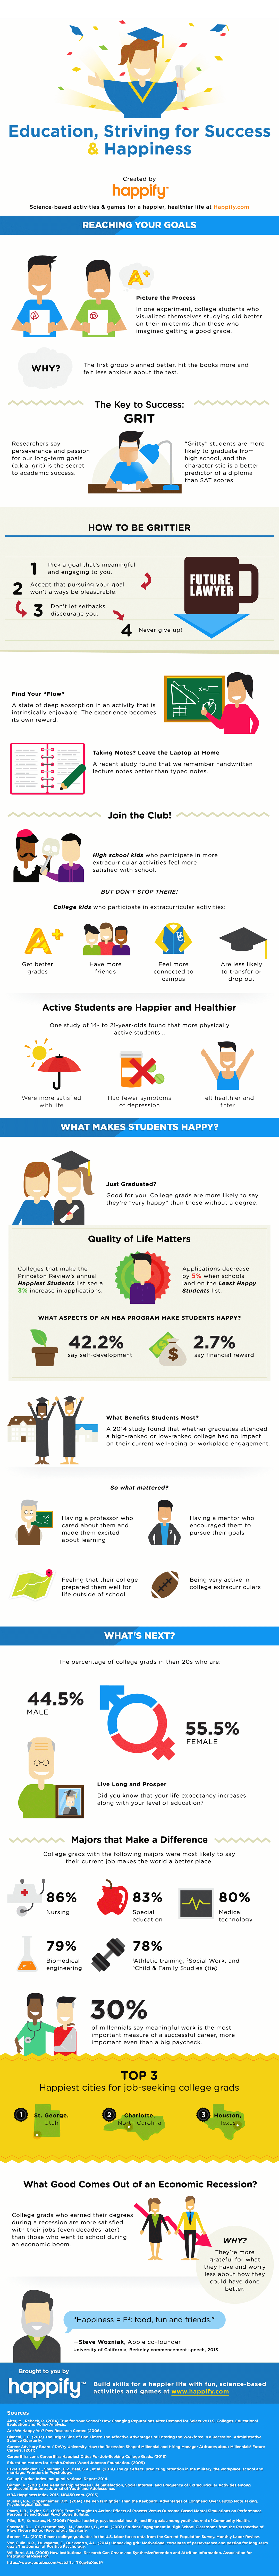 Happify_infographic